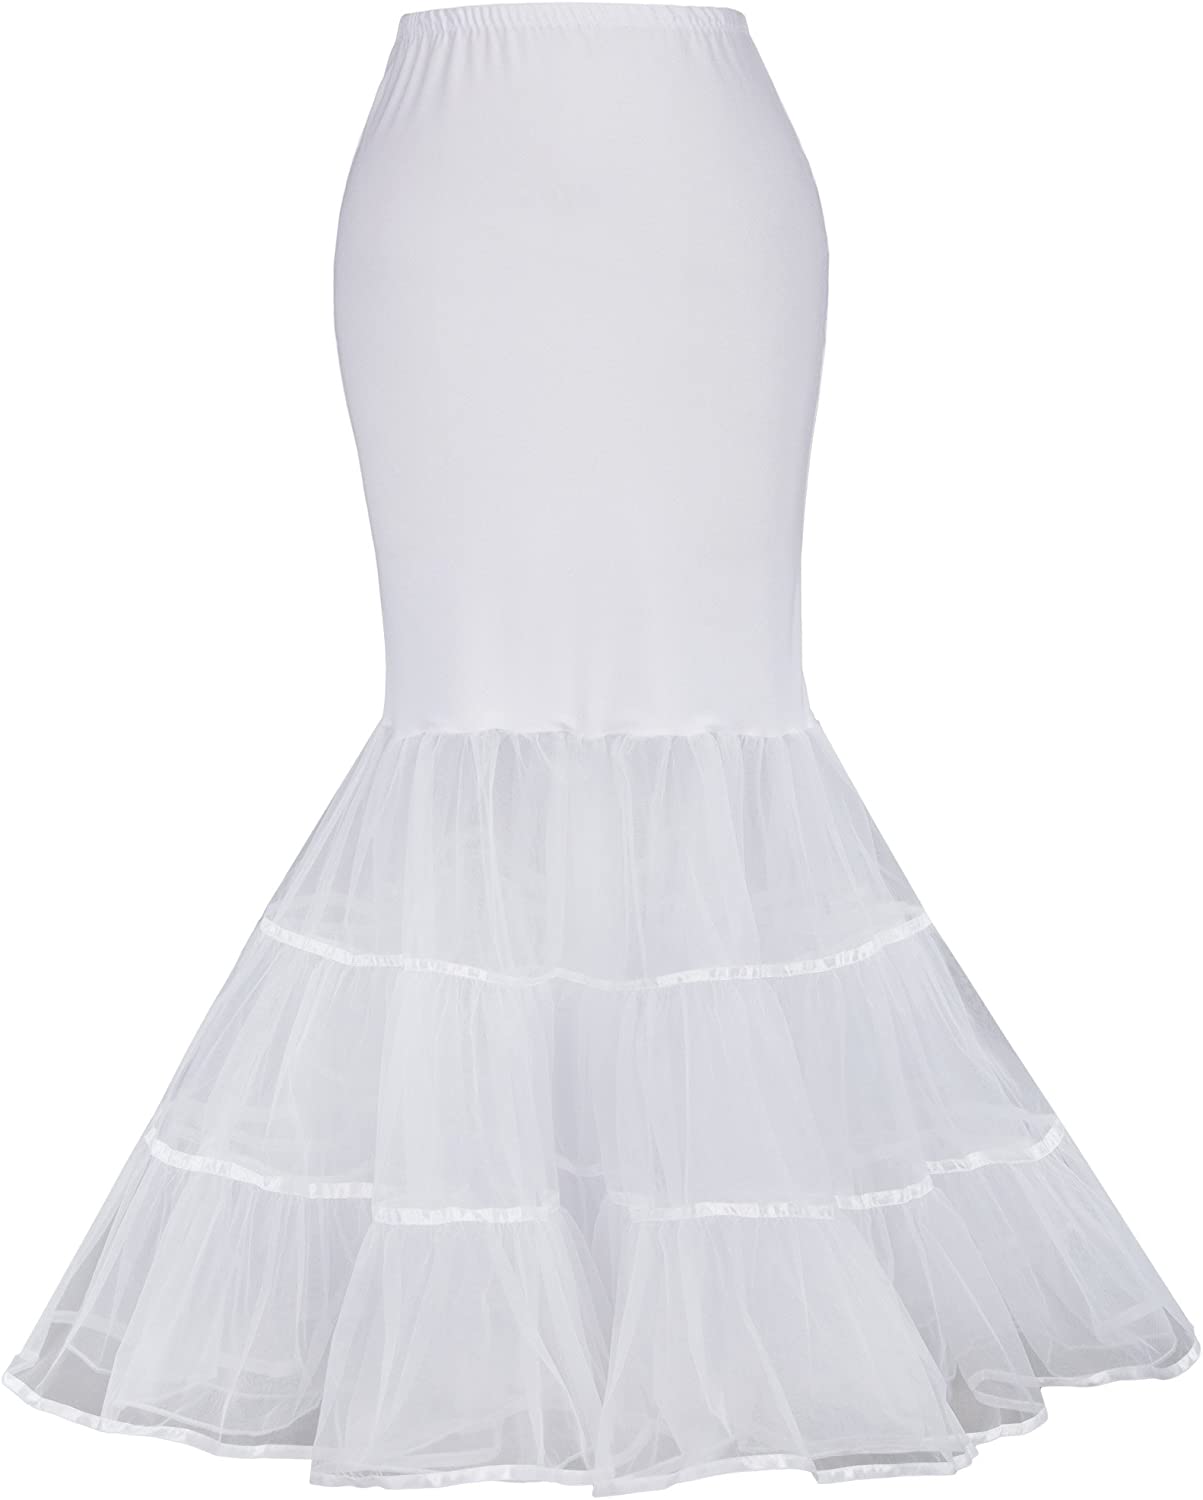 Price:$15.99 GRACE KARIN Women's Mermaid Fishtail Crinoline Petticoat Floor Length Wedding Underskirt at Amazon Women’s Clothing store